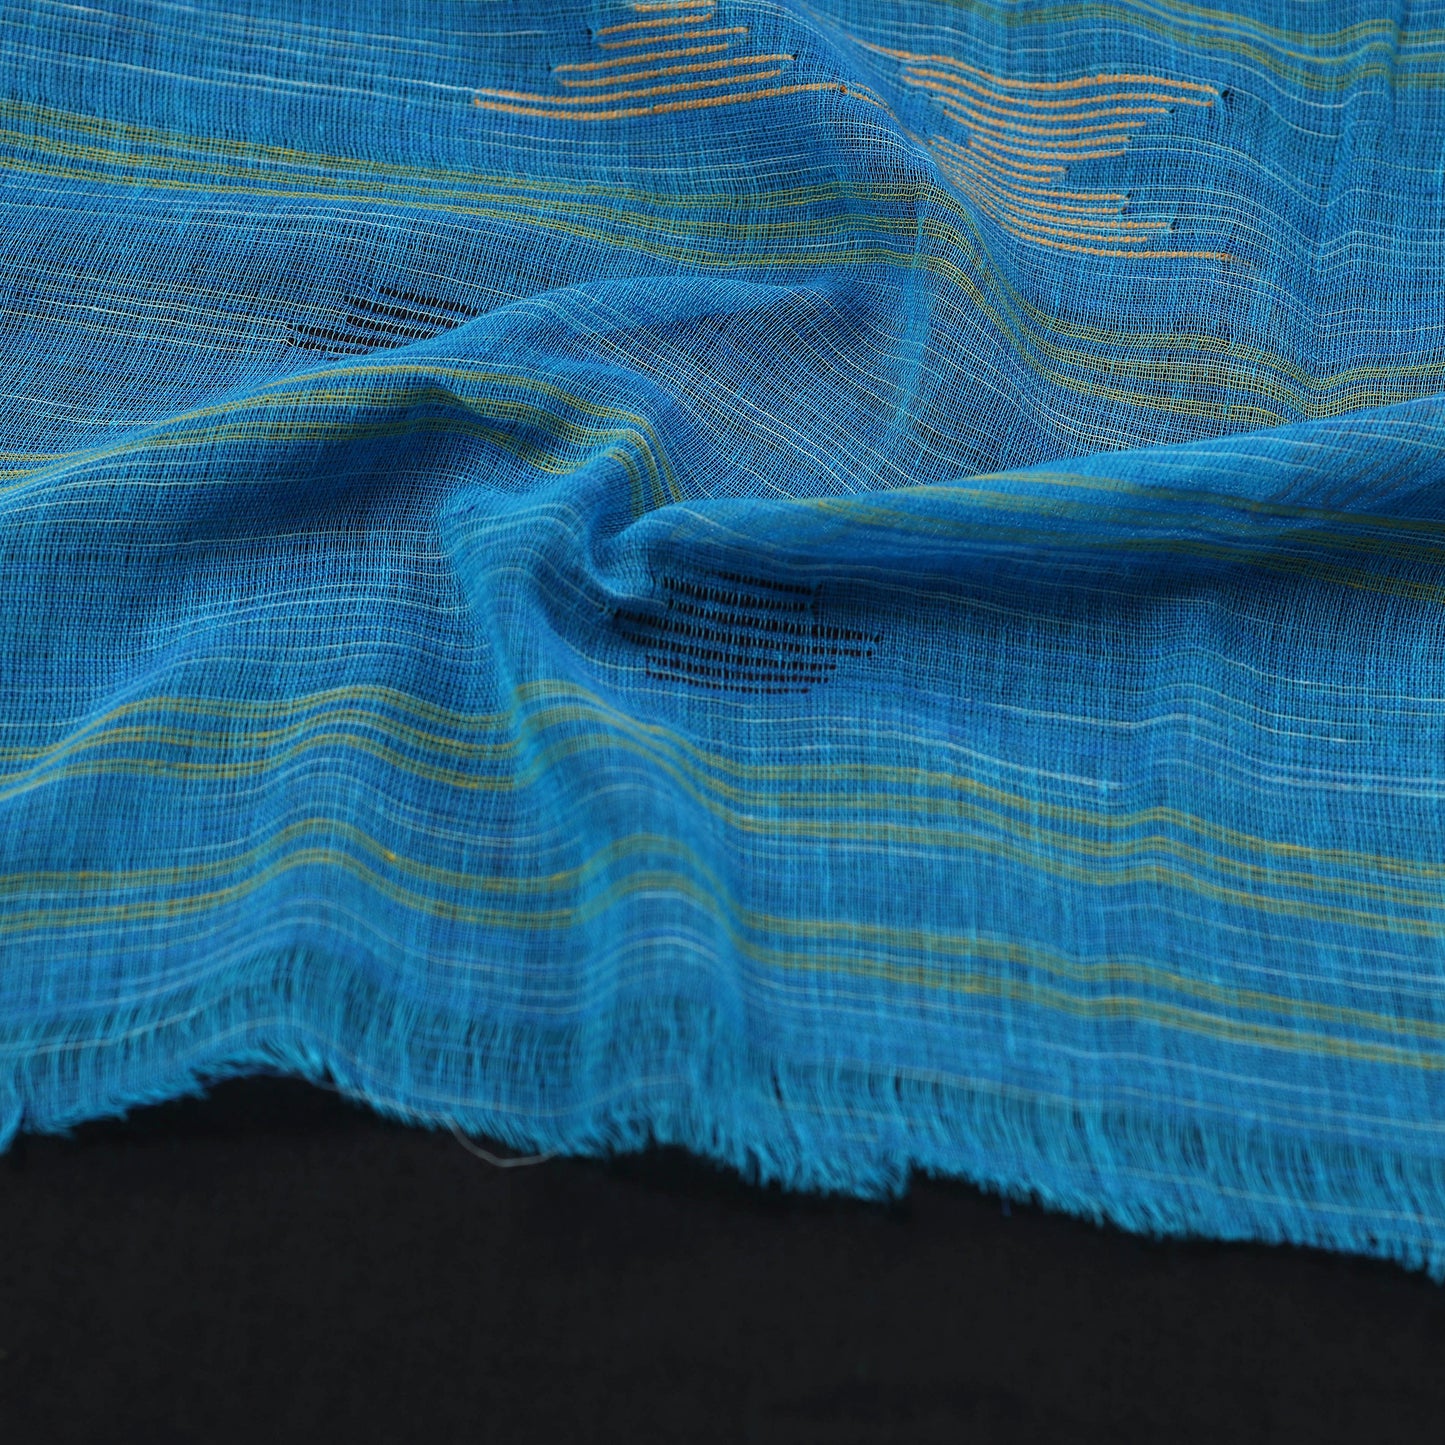 Blue - Traditional Handloom Cotton Manipuri Stole